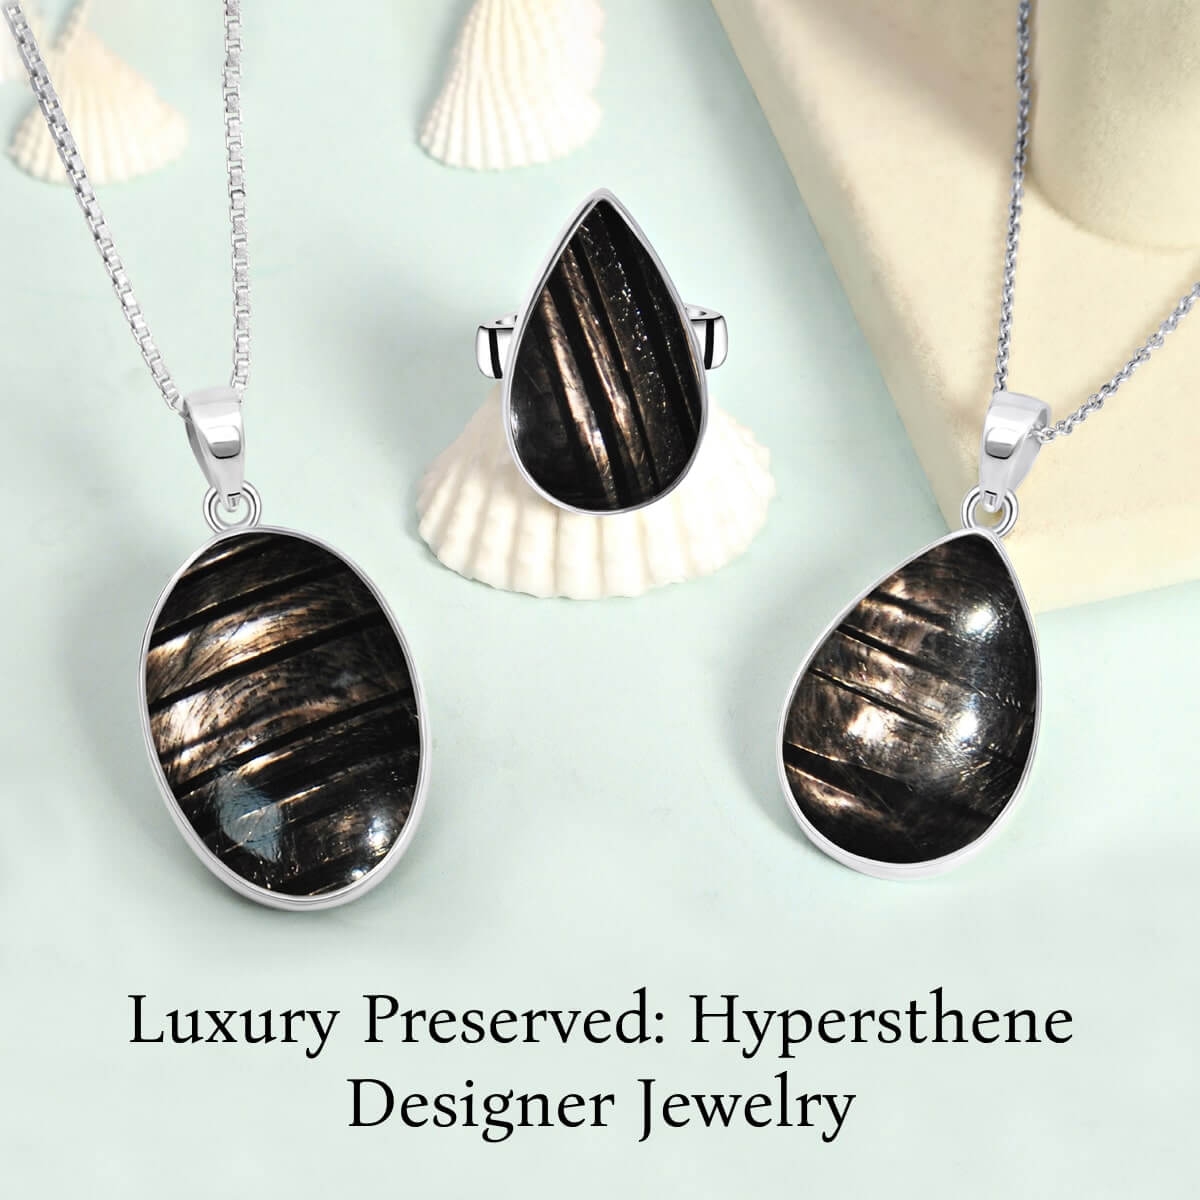 Care of Hypersthene Designer Jewelry